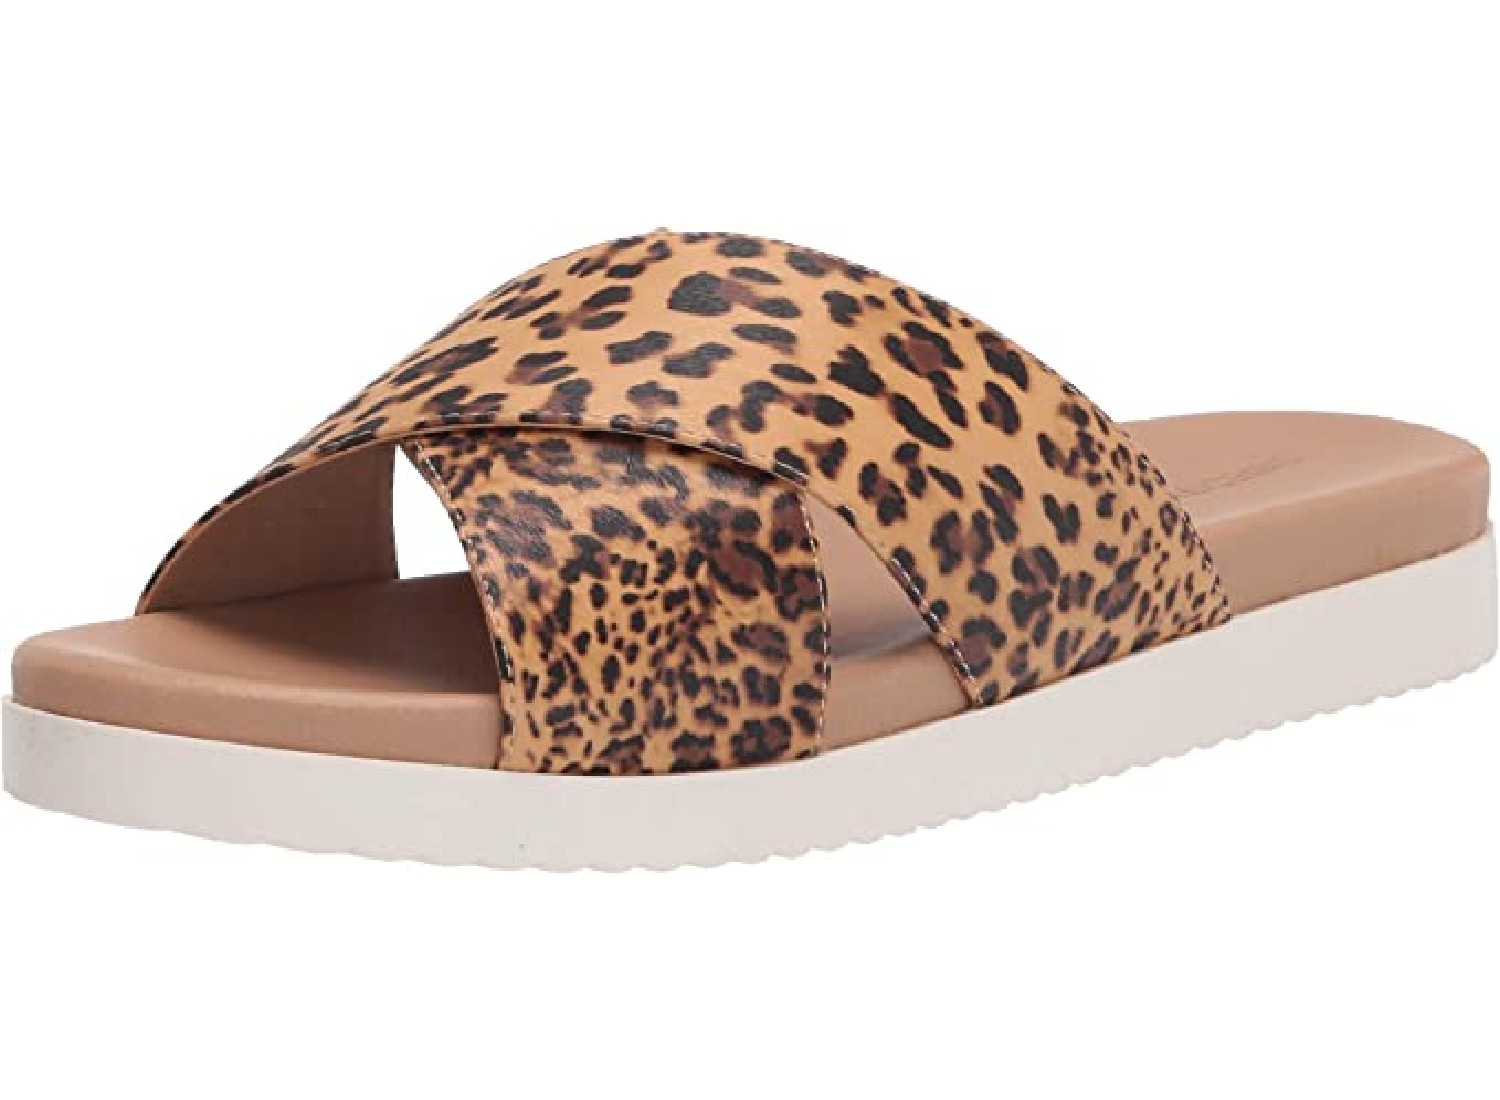 A leopard-print sandal